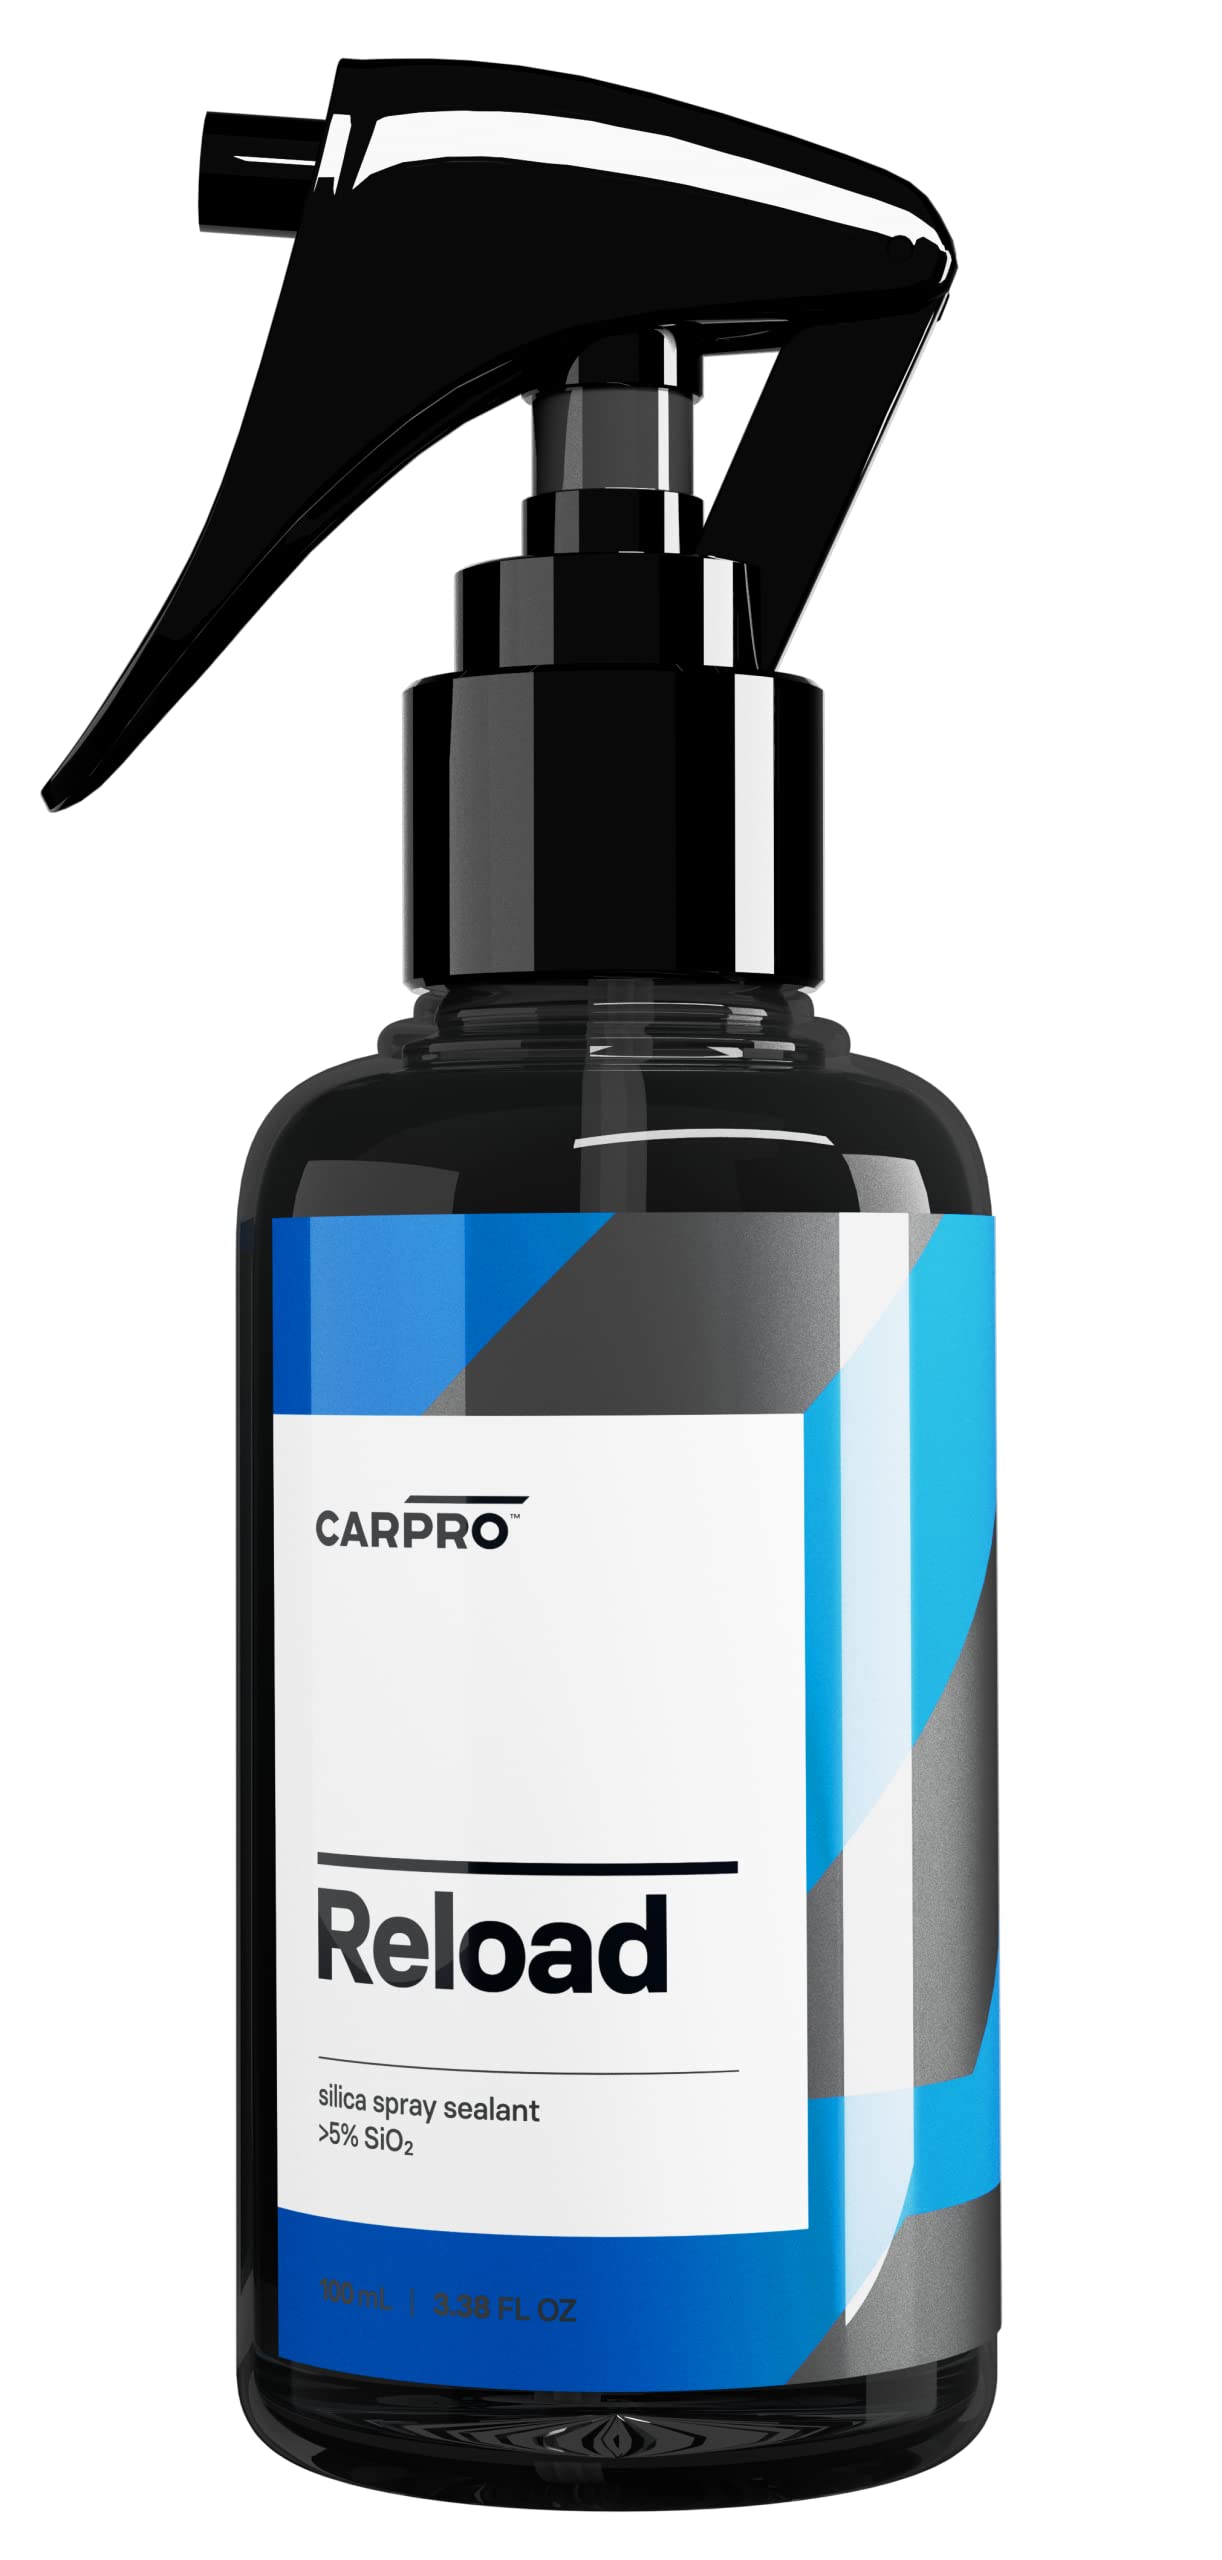 CARPRO Reload Spray Sealant and Sprayer with Sio2 (Quartz) Glass-Like Gloss, Hydrophobicity and Silica Nanotechnology, Repels Dirt, Spray-On, Wipe-Off Car Sealant, 100mL (3.4oz) von CarPro